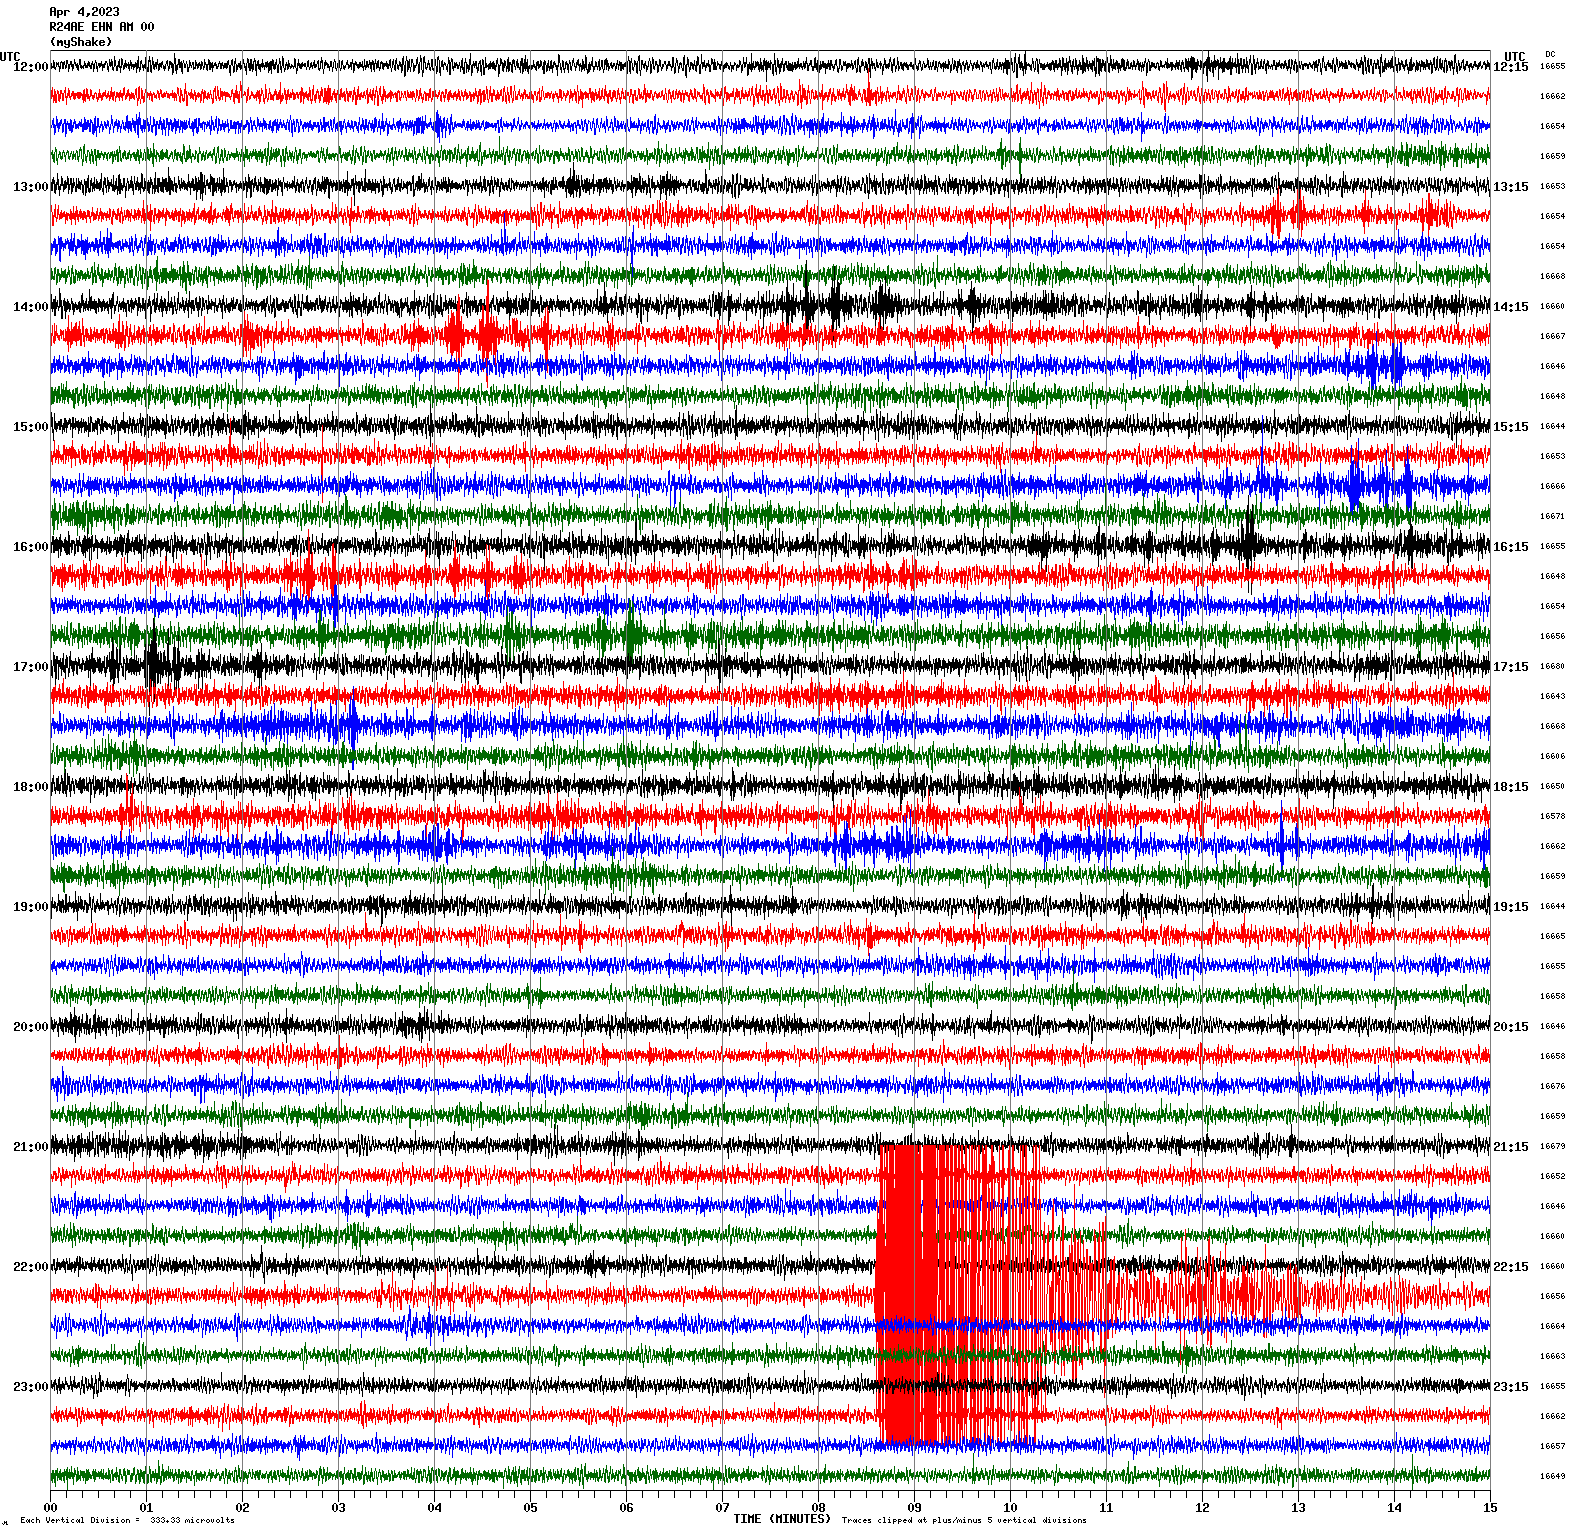 /seismic-data/R24AE/R24AE_EHN_AM_00.2023040412.gif